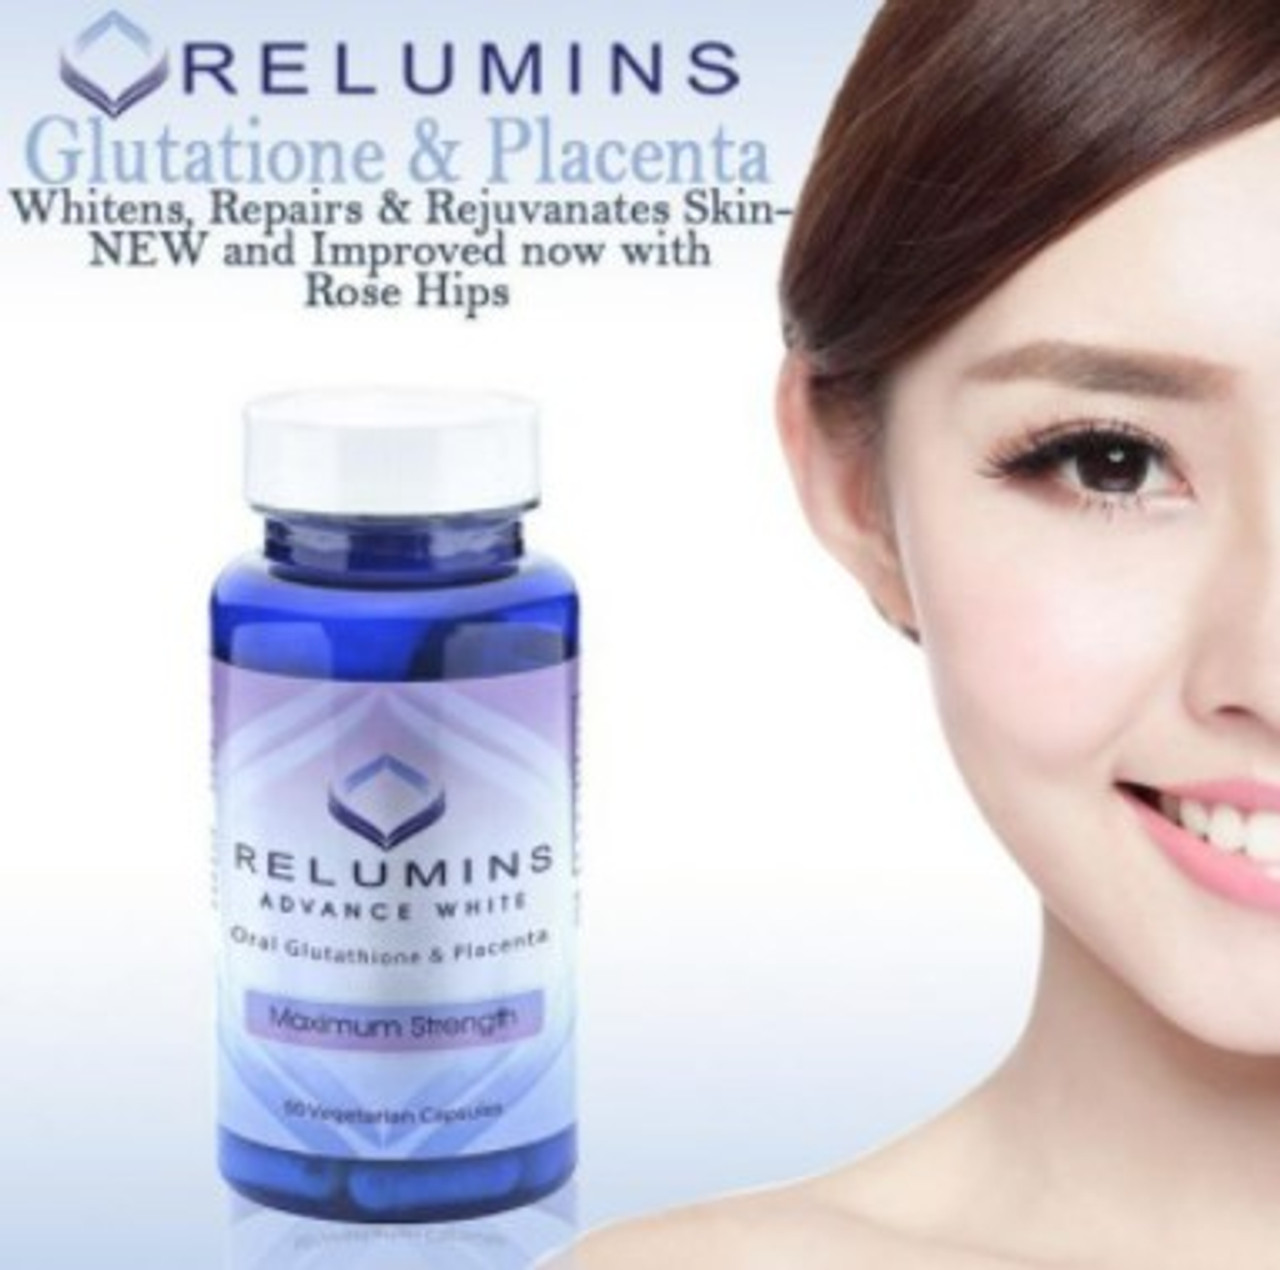 2x of RELUMINS ADVANCE WHITE ORAL GLUTATHIONE & PLACENTA MAXIMUM STRENGTH Skin Whitening 